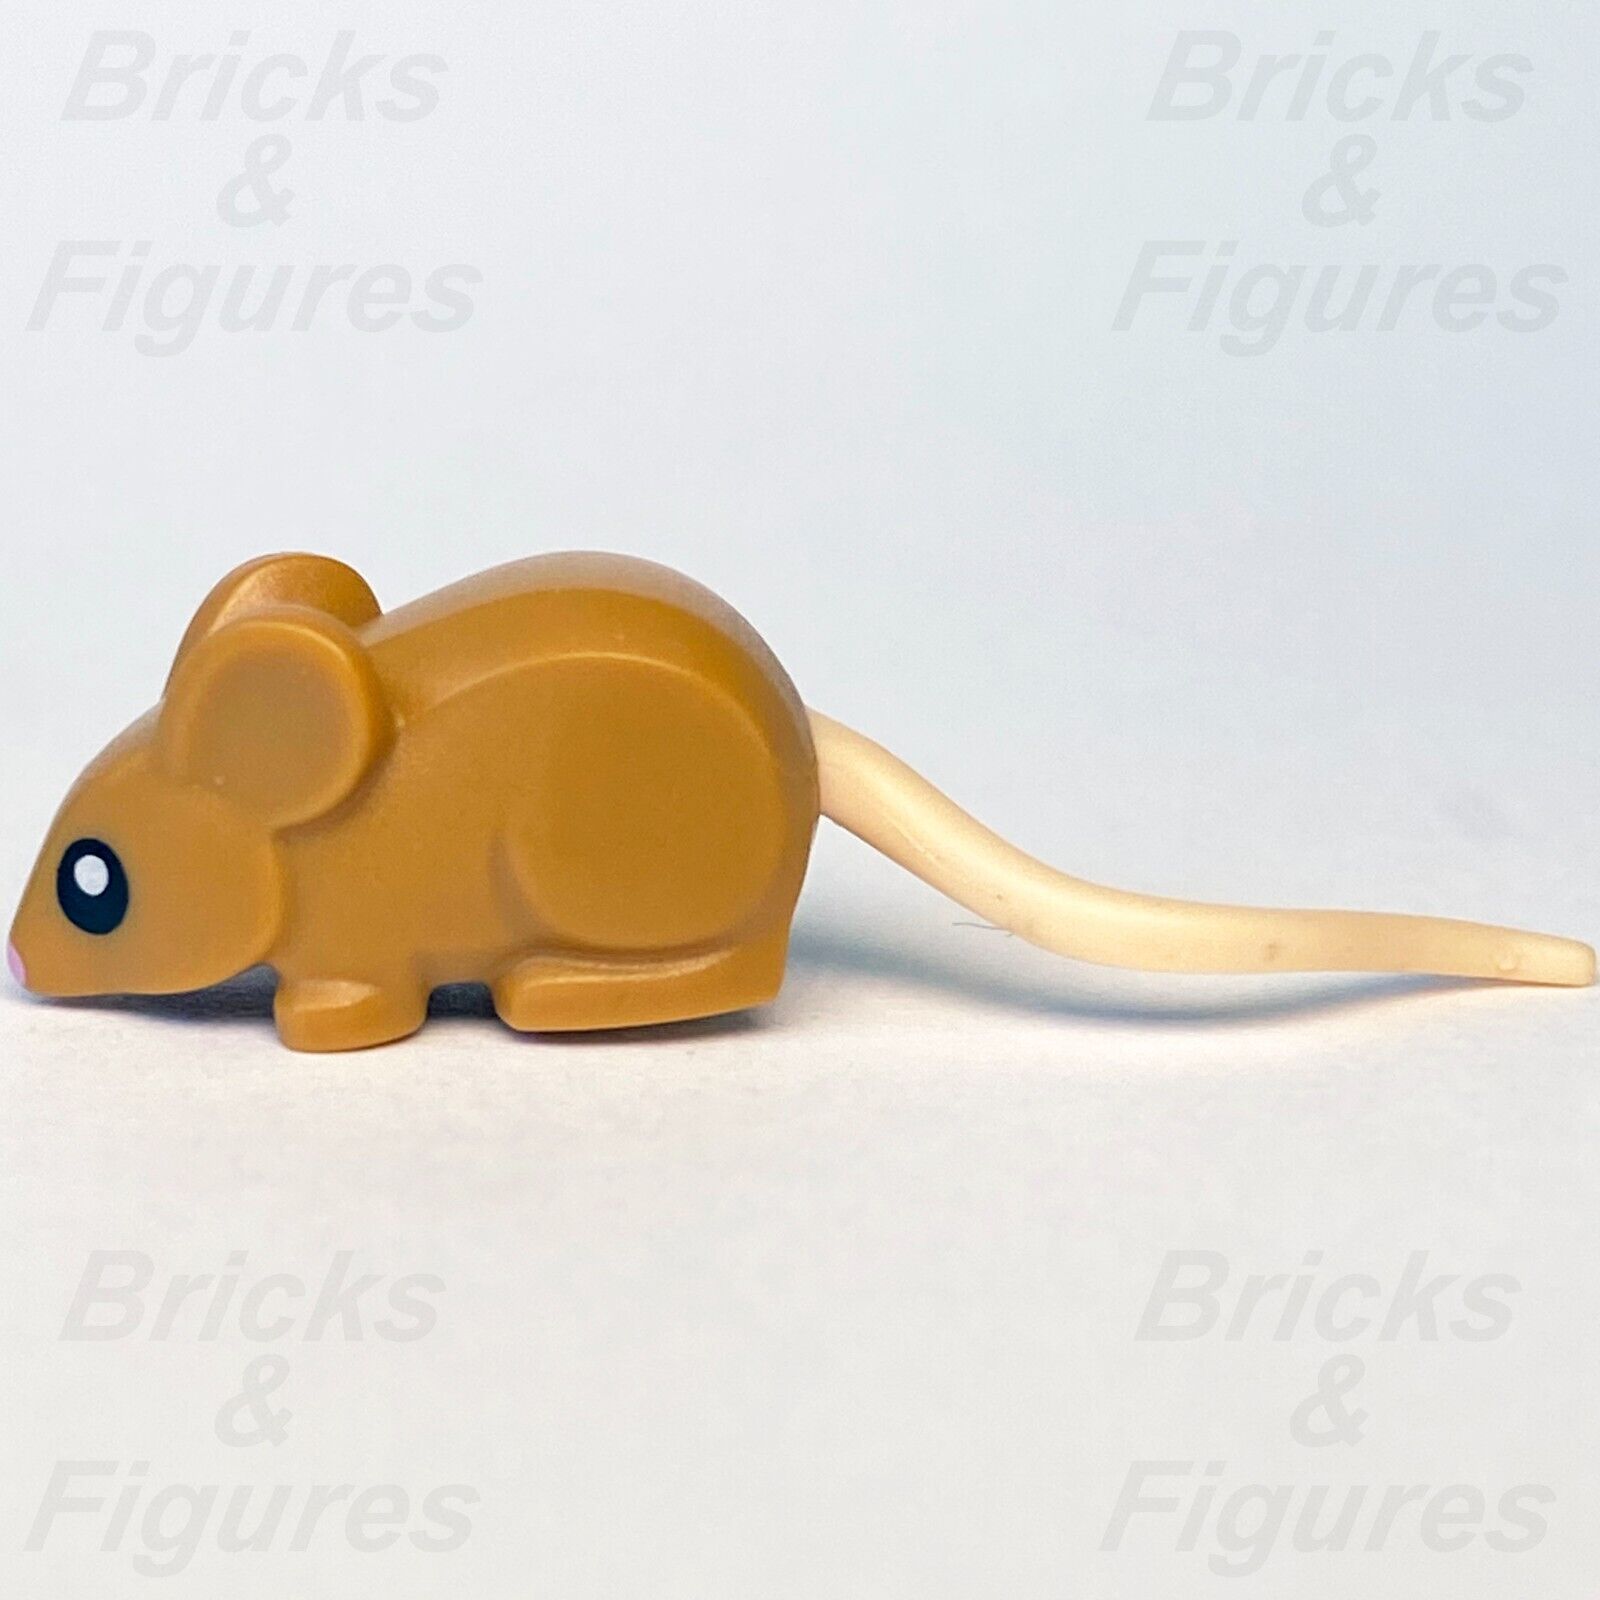 LEGO Mouse Animal Minifigure Part Collectible Series 18 71021 35757c01pb01 - Bricks & Figures